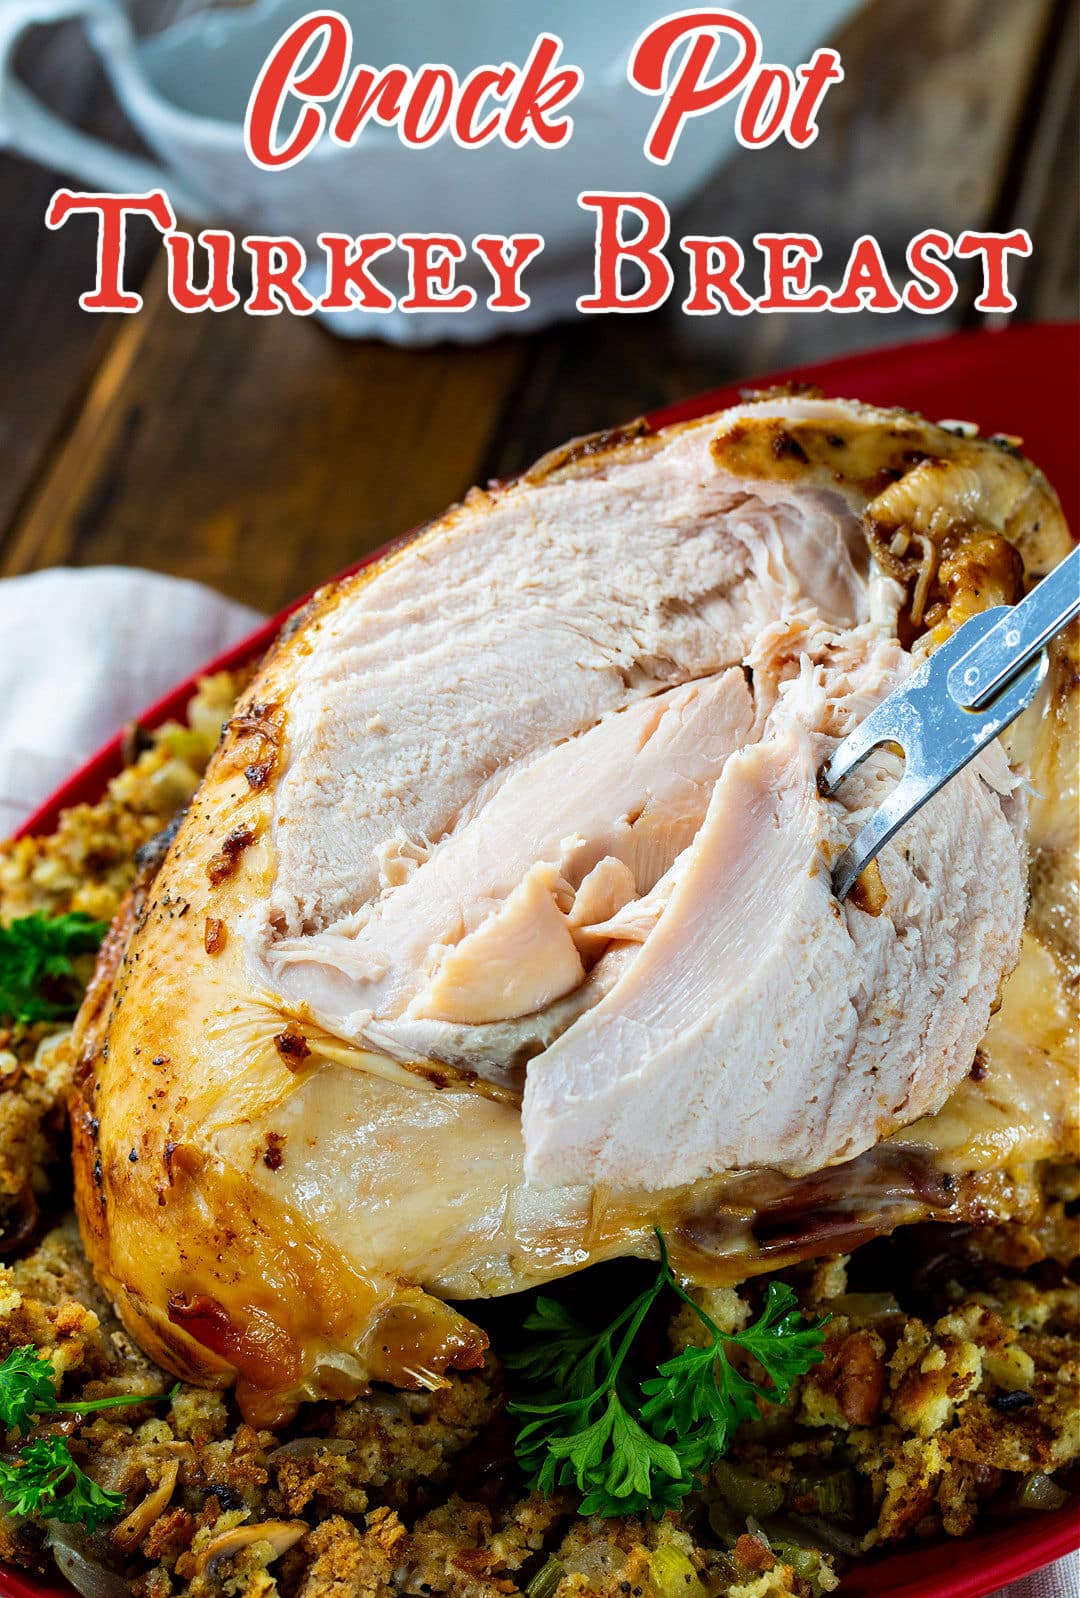 Crock Pot Turkey Breast on a serving platter.